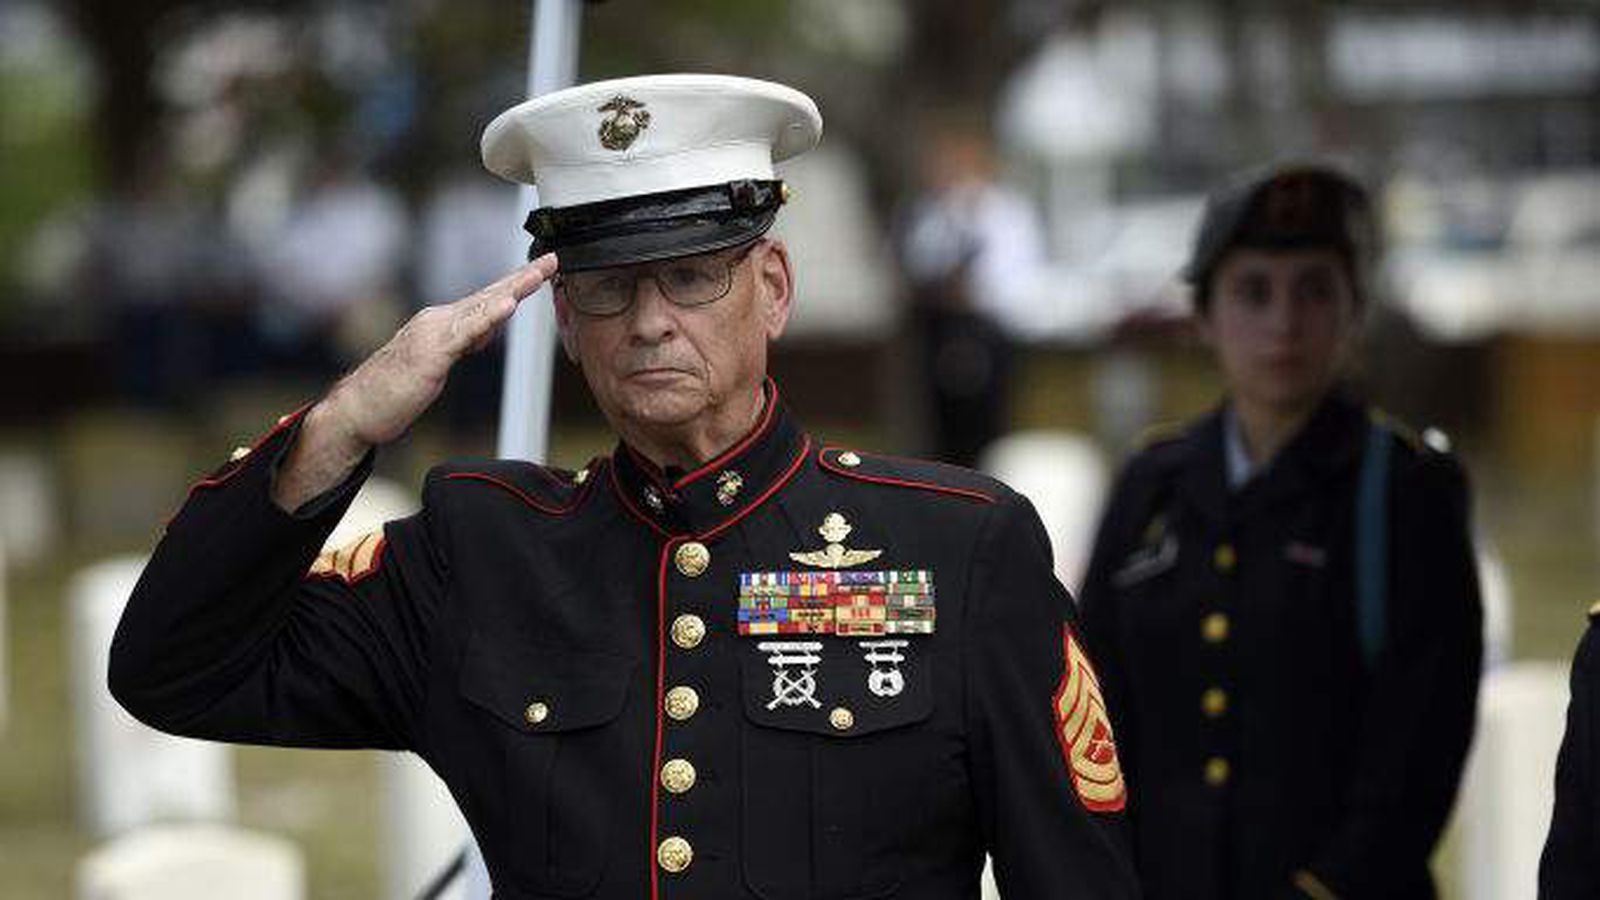 Vietnam medals weren't enough for popular Marine who embellished record